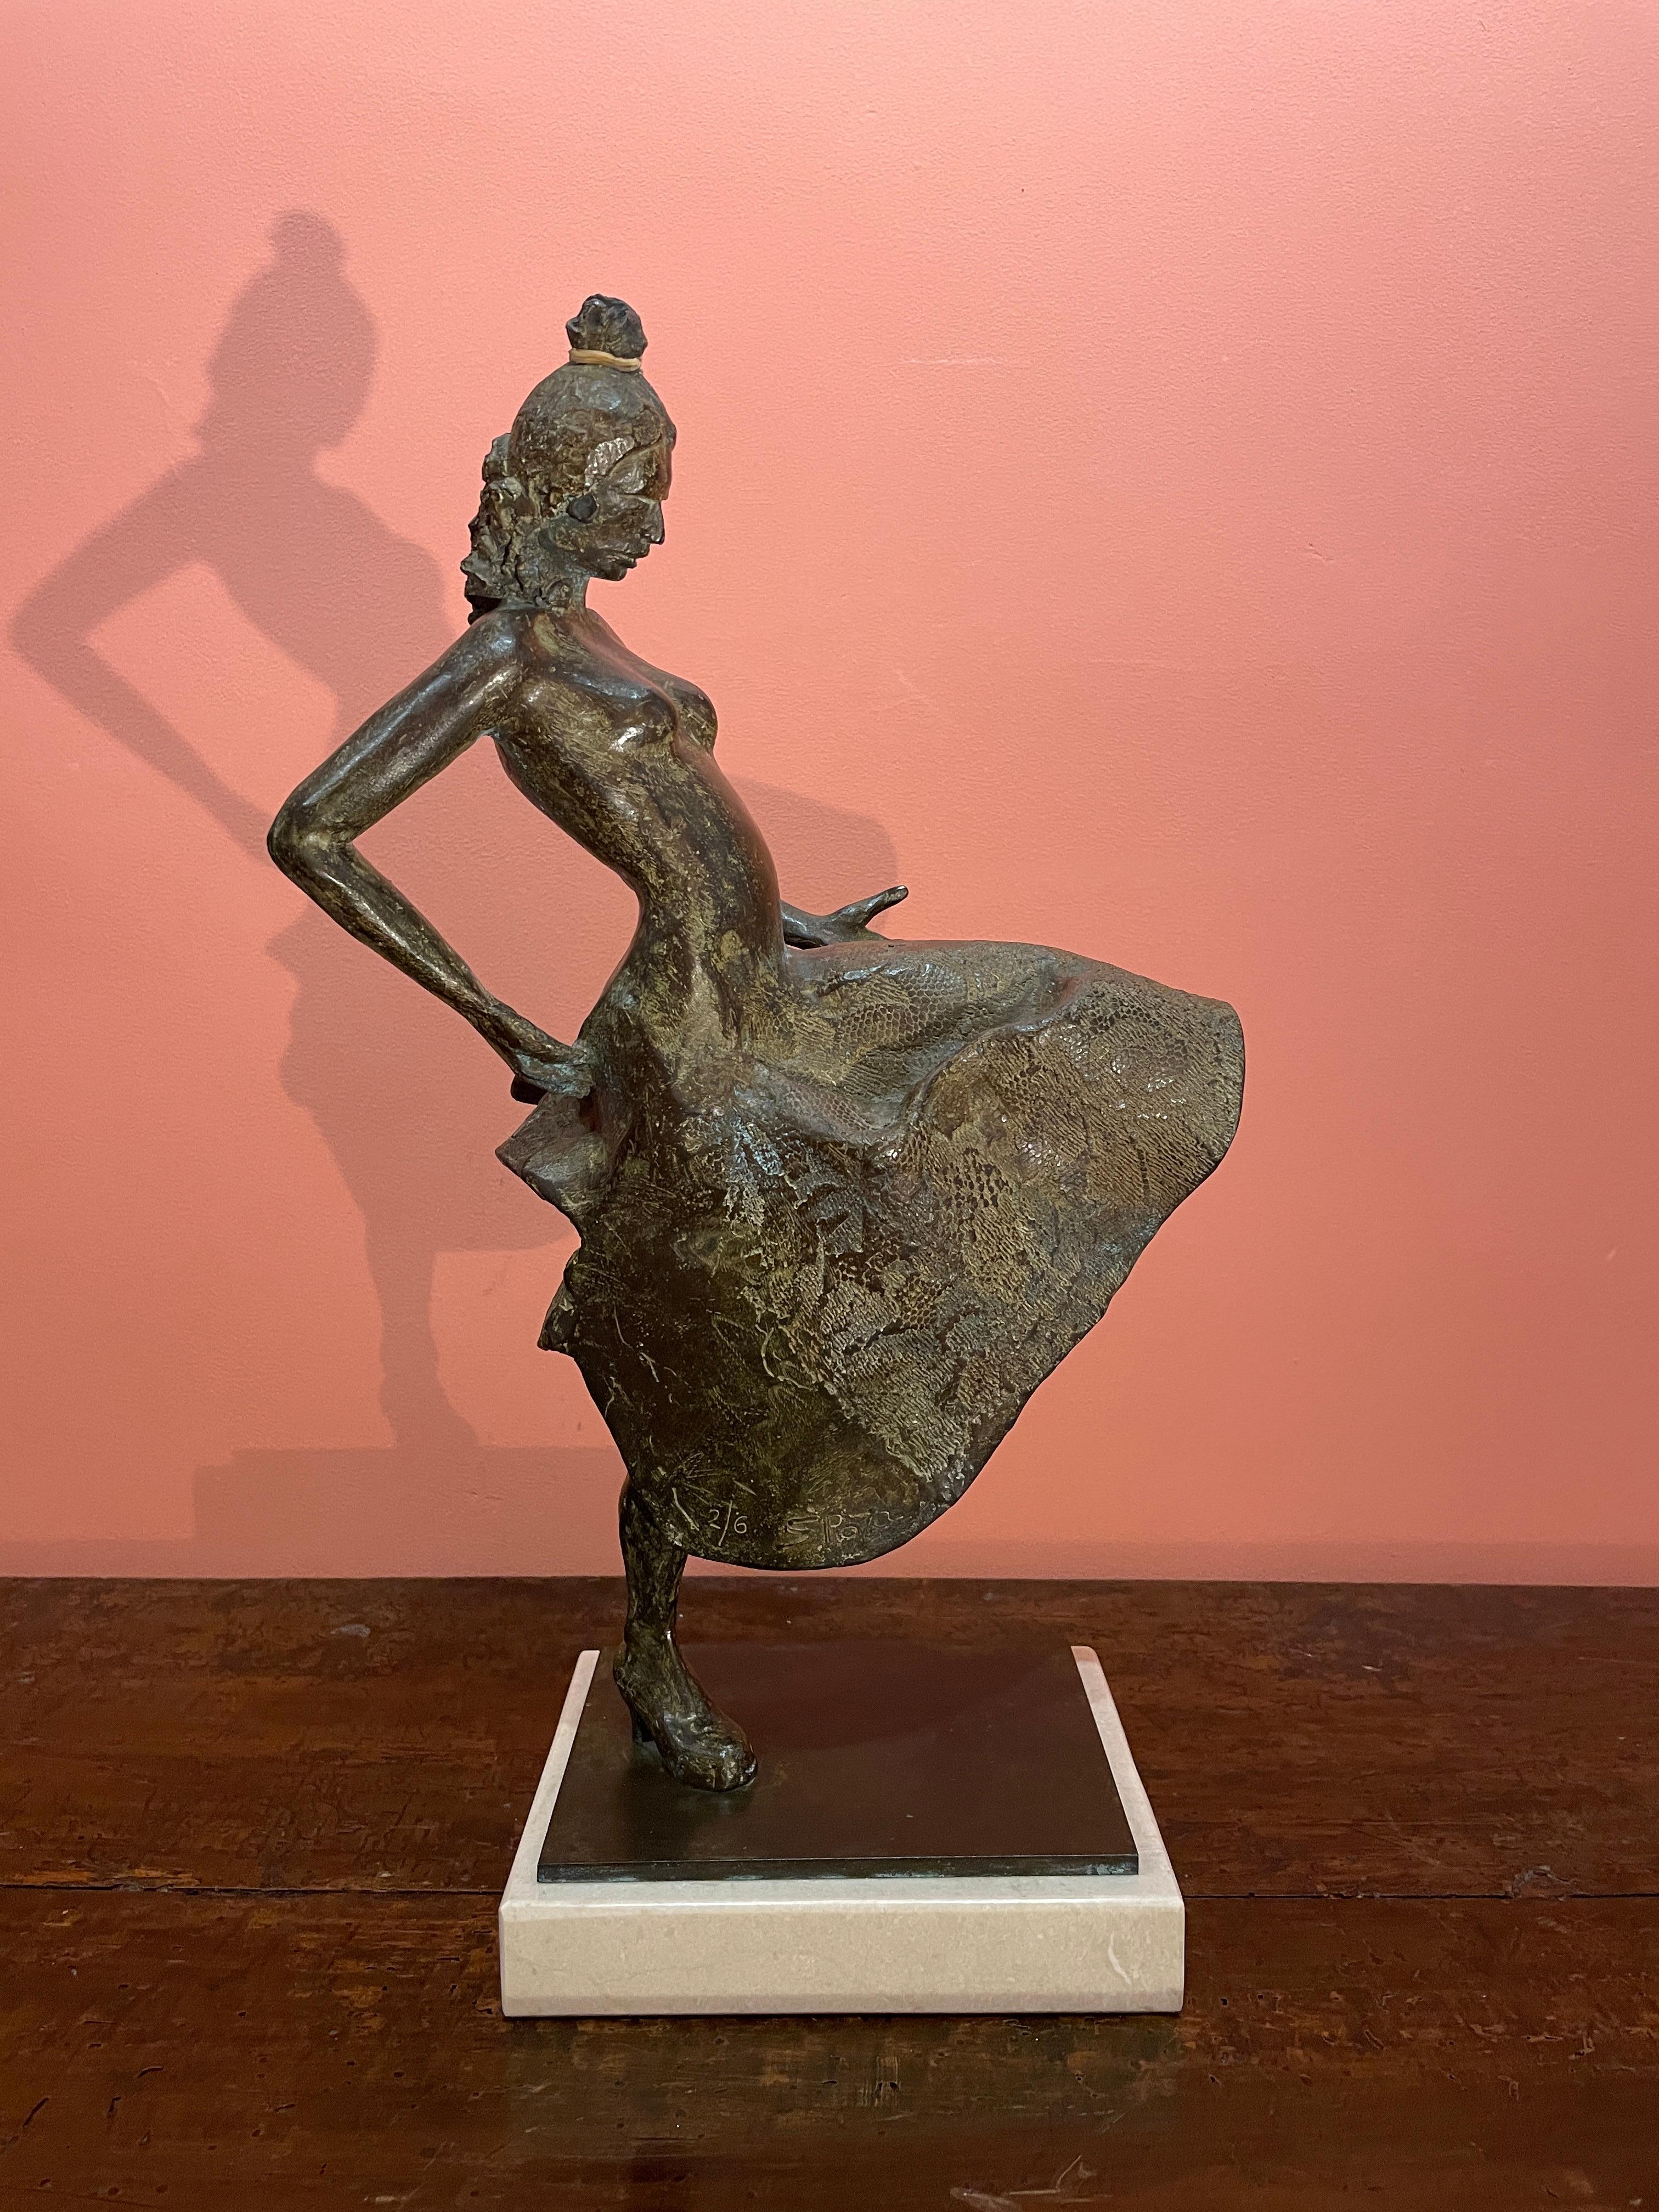 SILVINO POZA
1926 - 2010

Zambra

Sculpture en bronze avec patine verte
Technique de la cire perdue
Signé : S.Poza
Numeroté : n° 2/6
